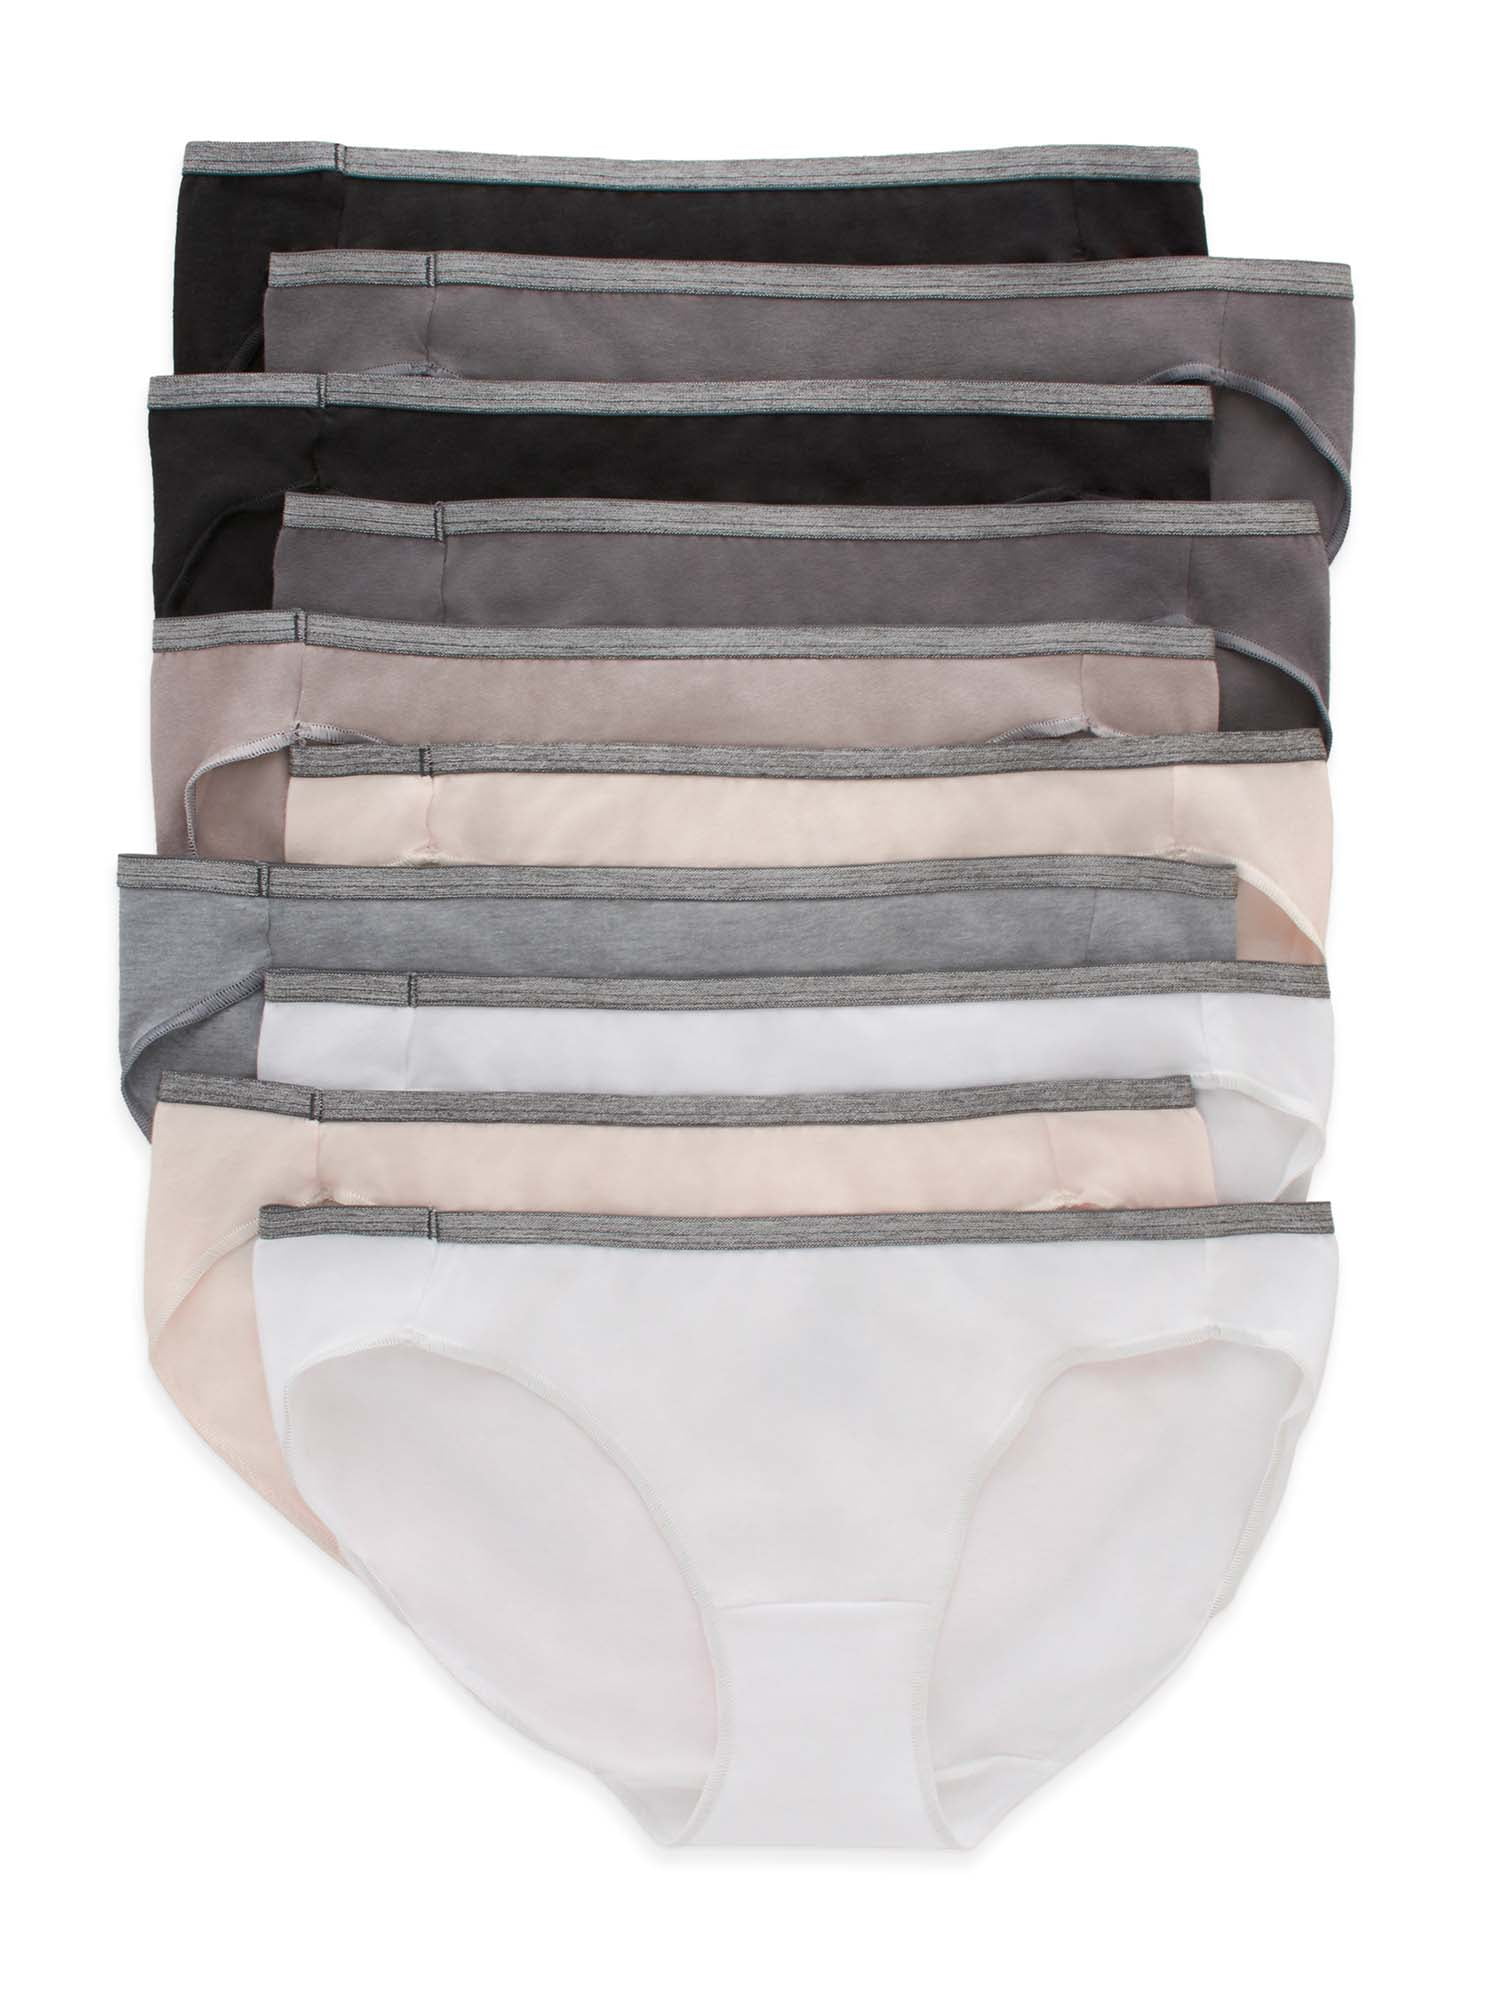 Buy Hanes Womens Cotton Brief Panties, 10-Pack at Ubuy Kuwait